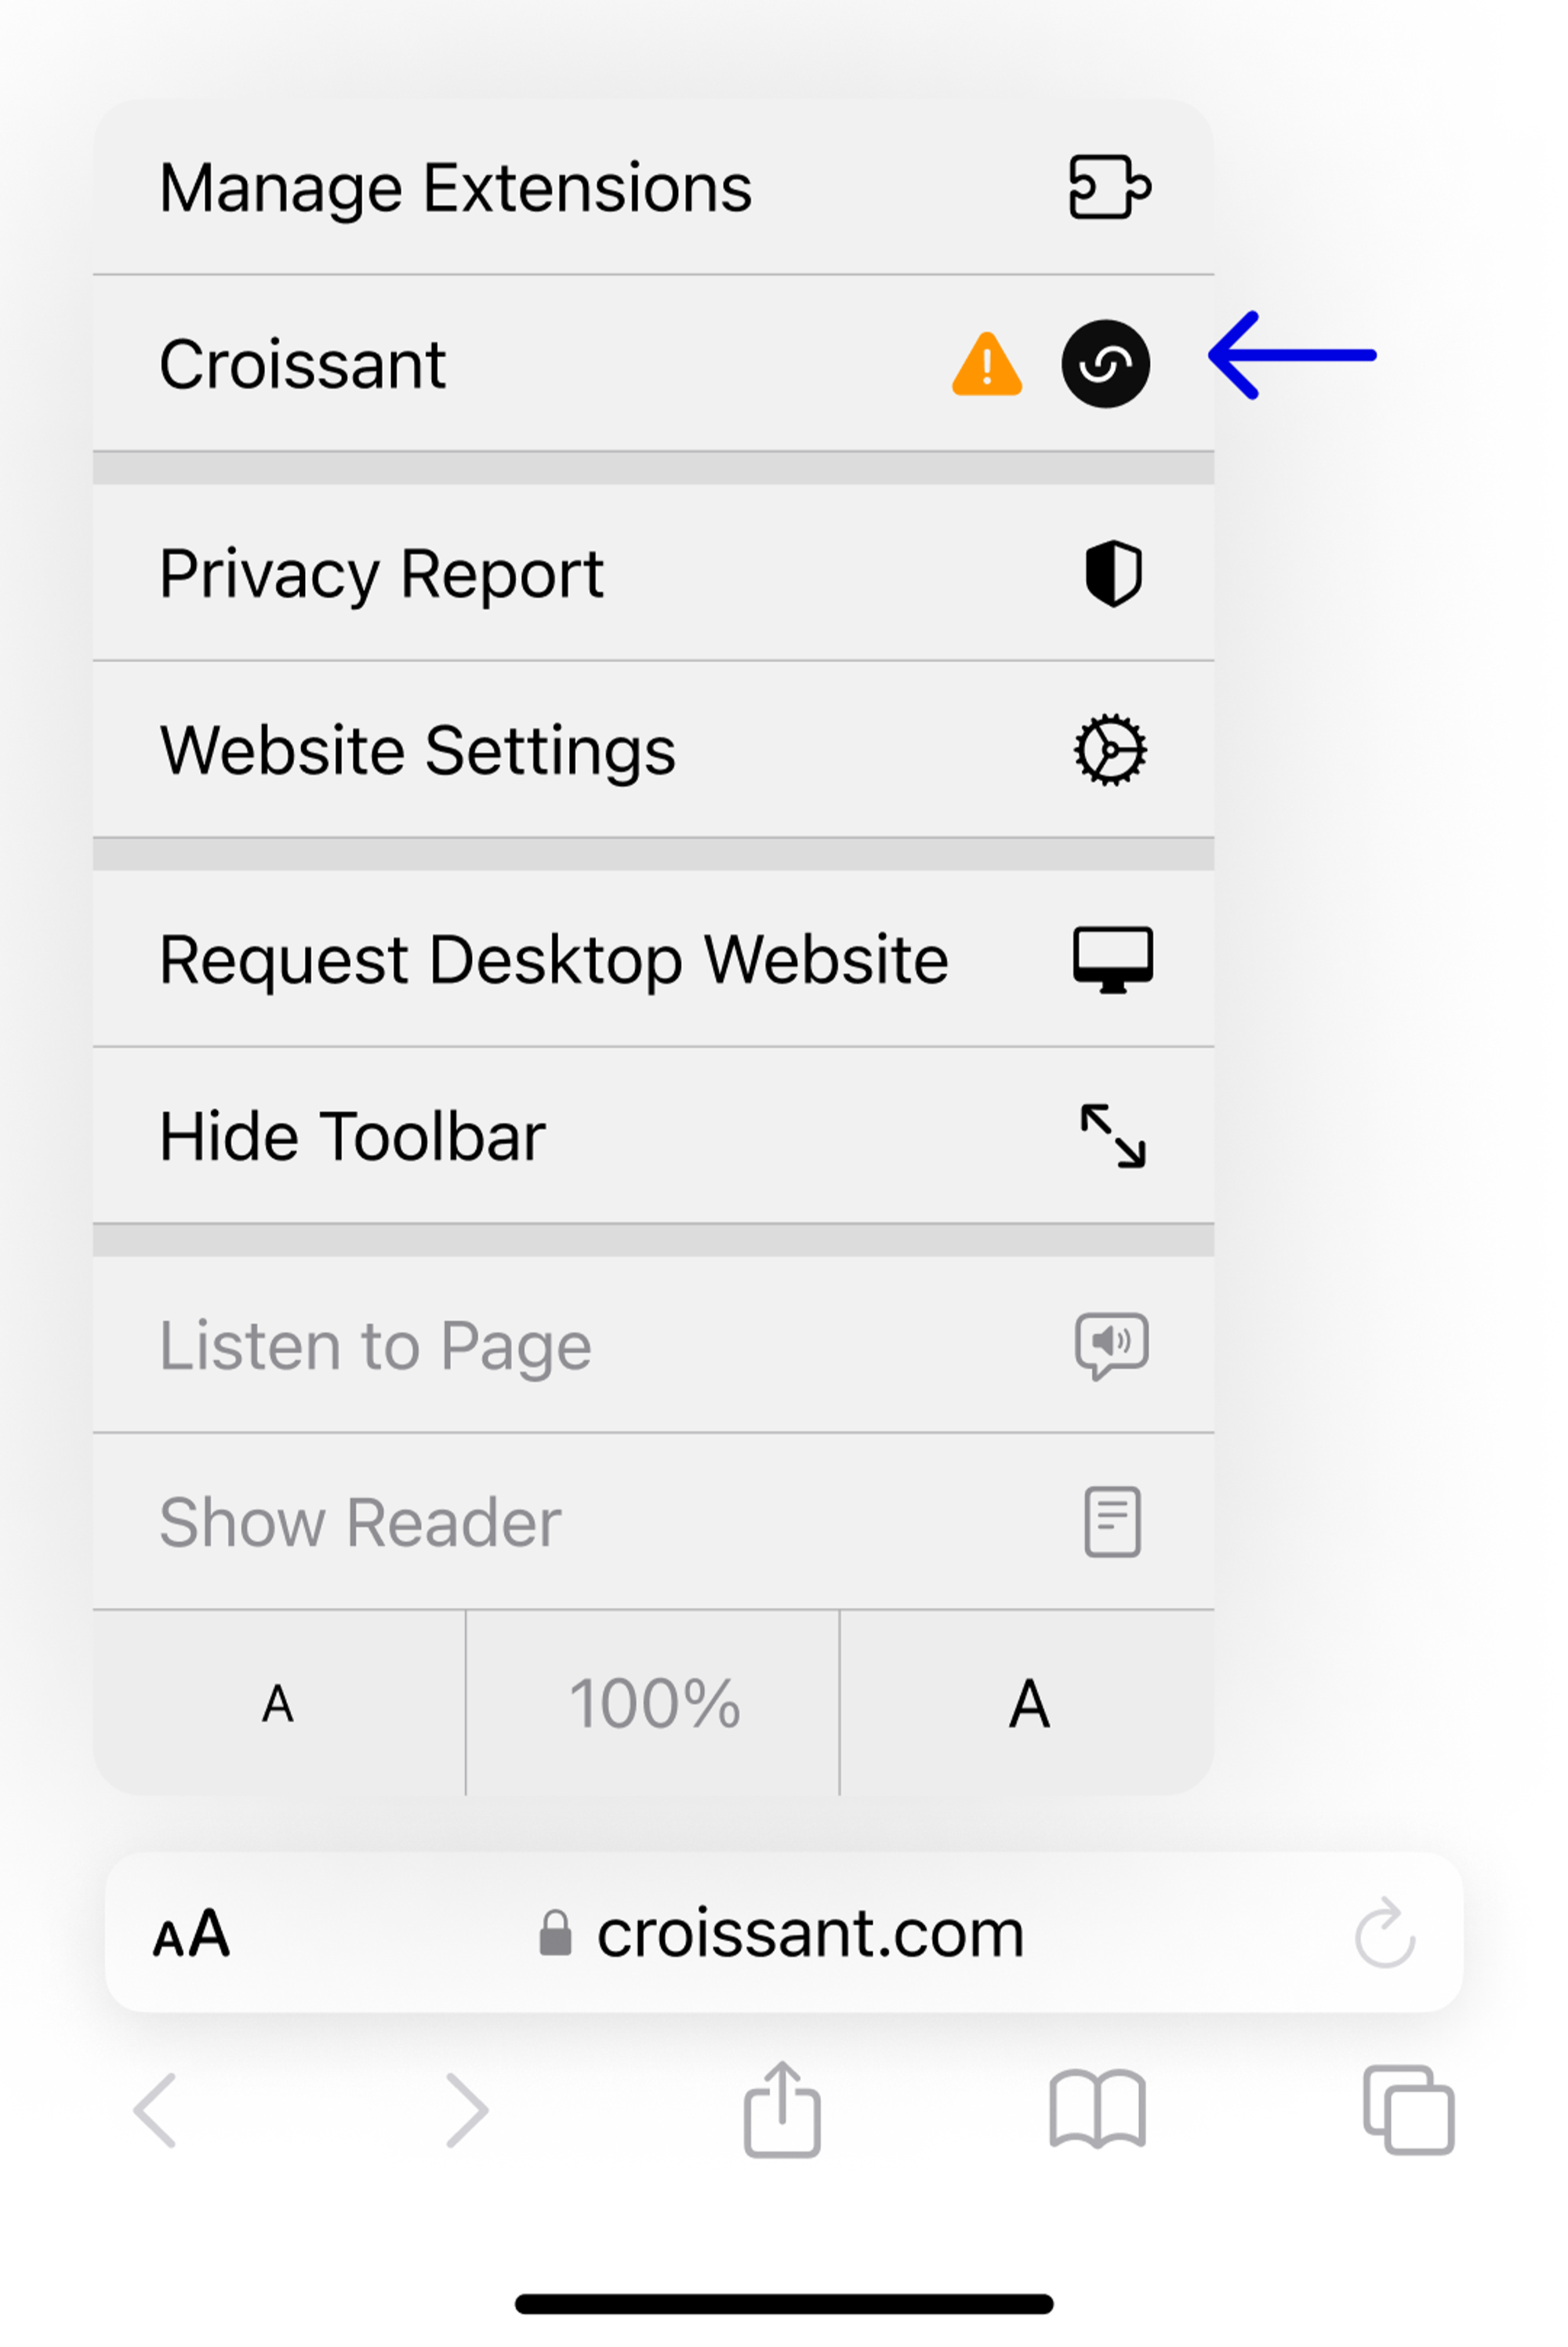 The Croissant Safari Extension permissions section of the Safari options menu.